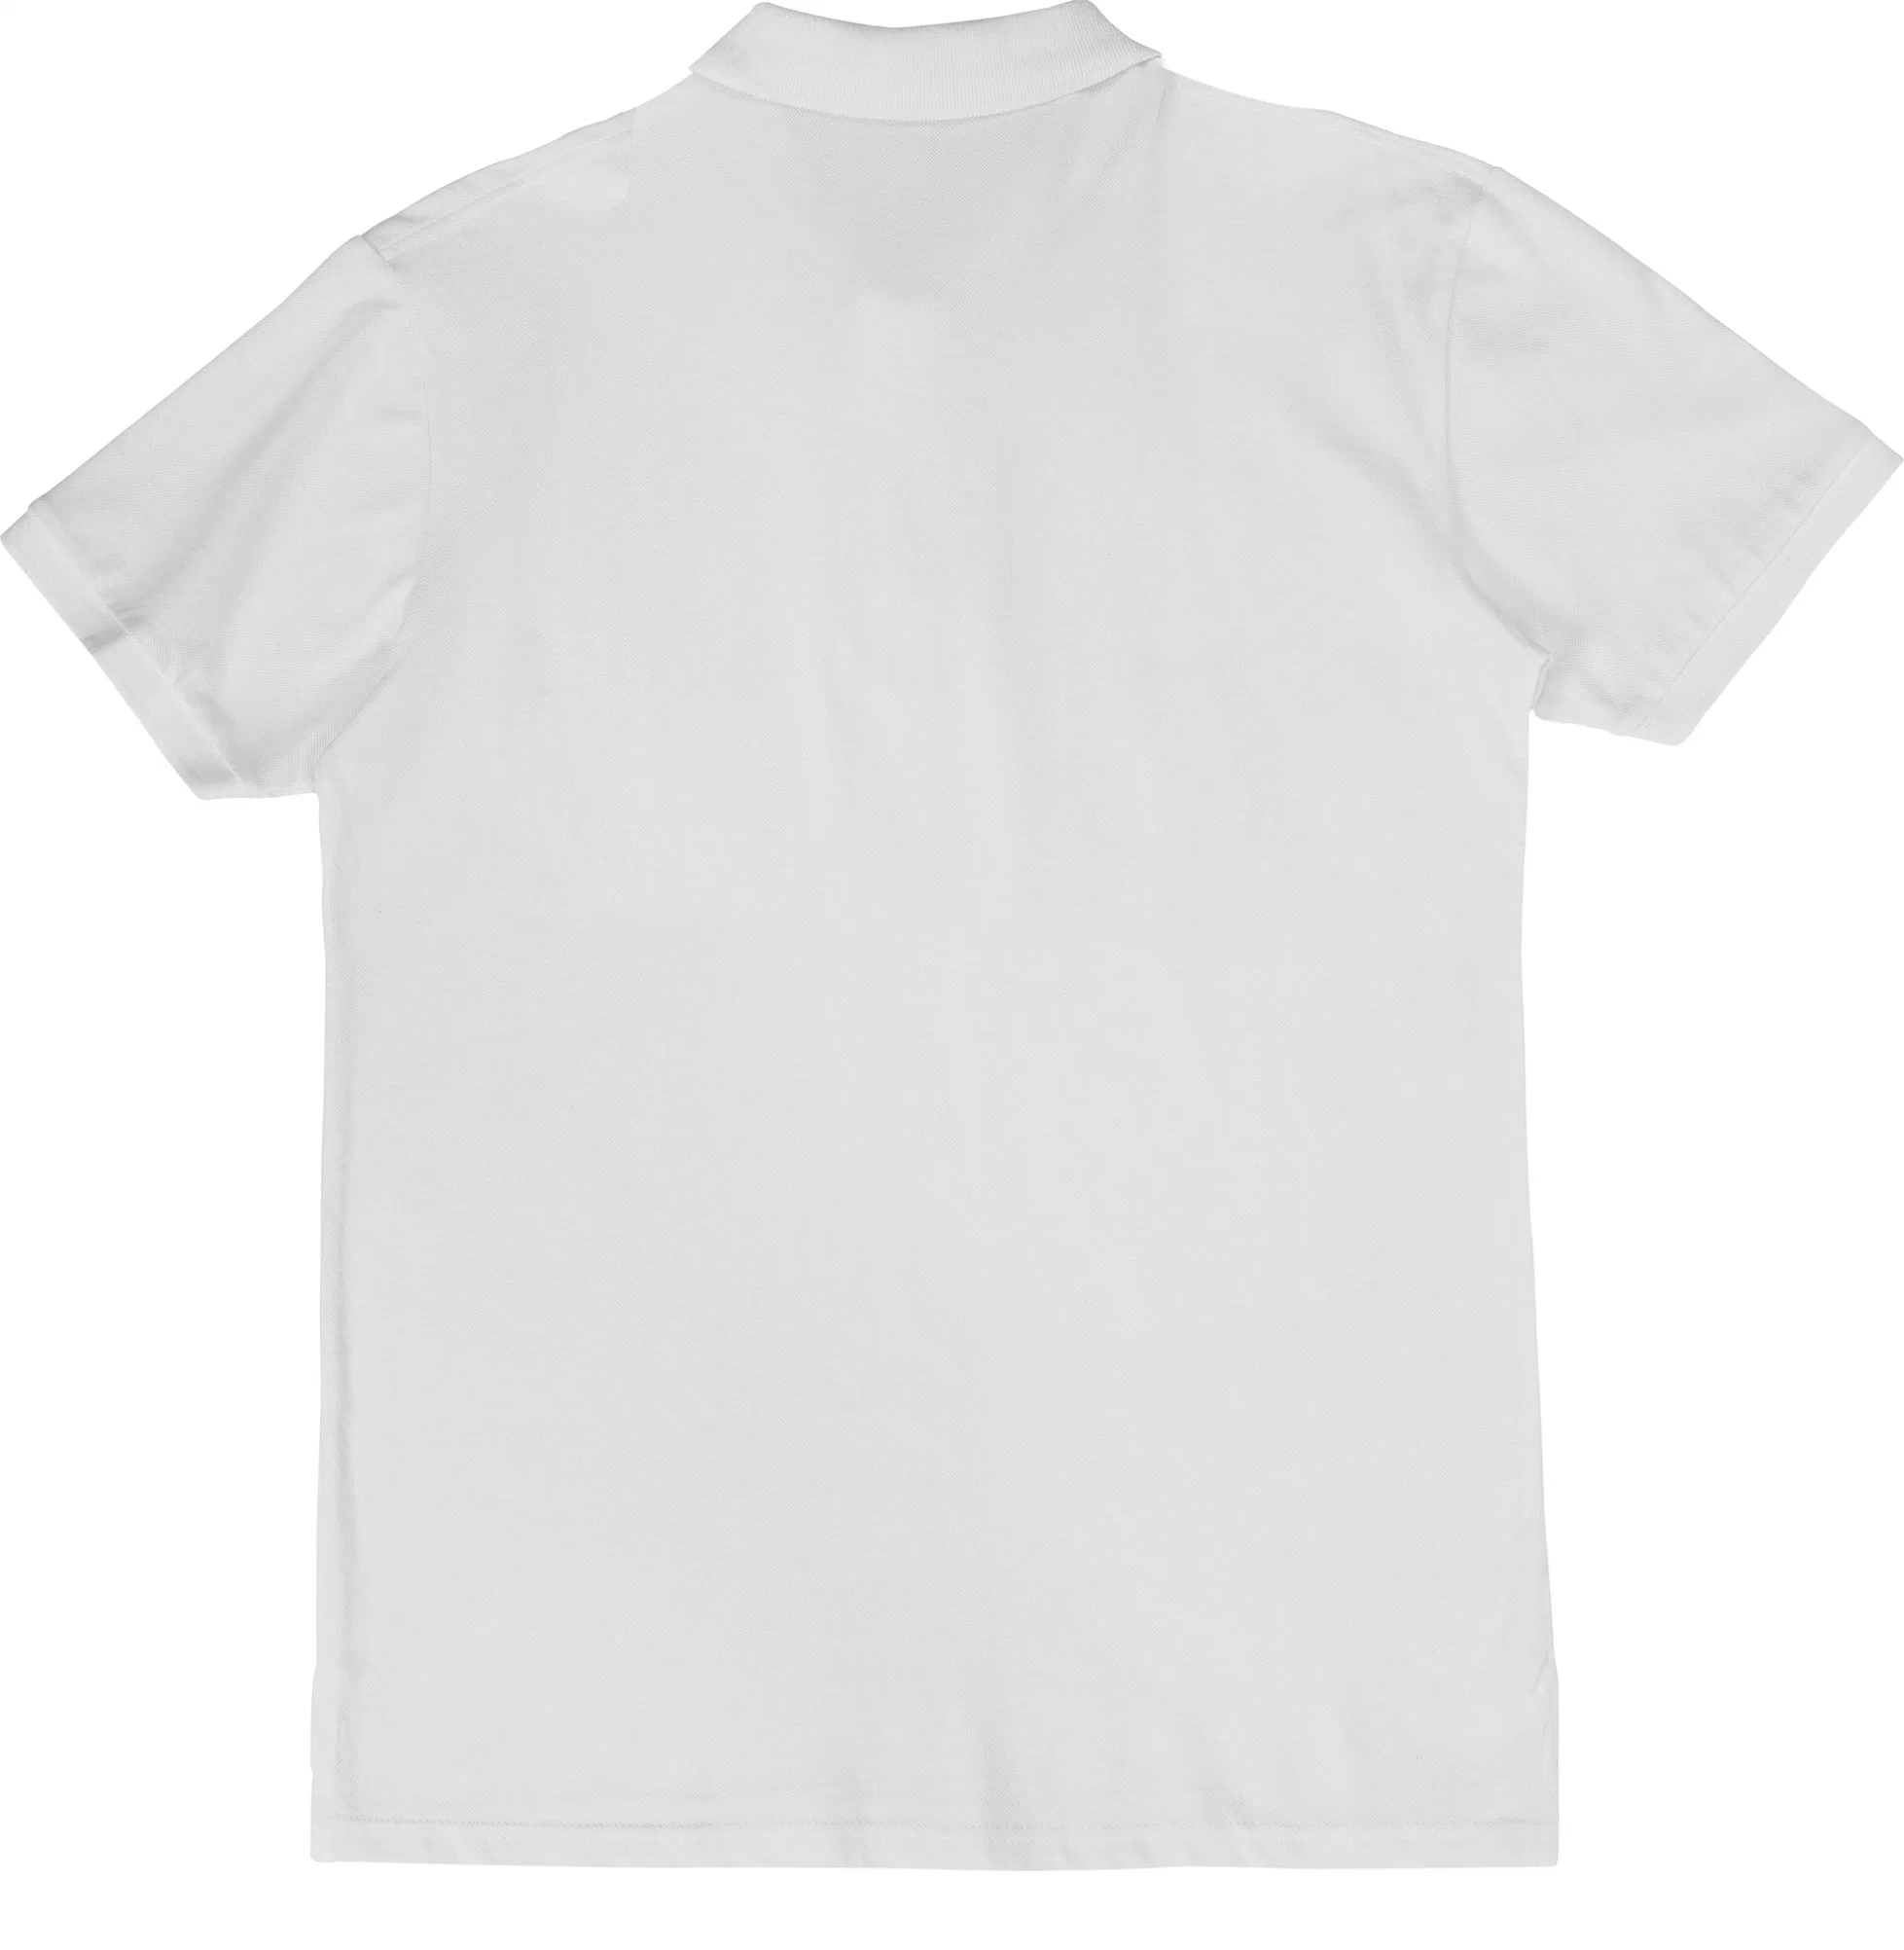 Workwear Golf Shirt Polo Shirt Factory High quality/High cost performance Cotton Men Polo Shirts